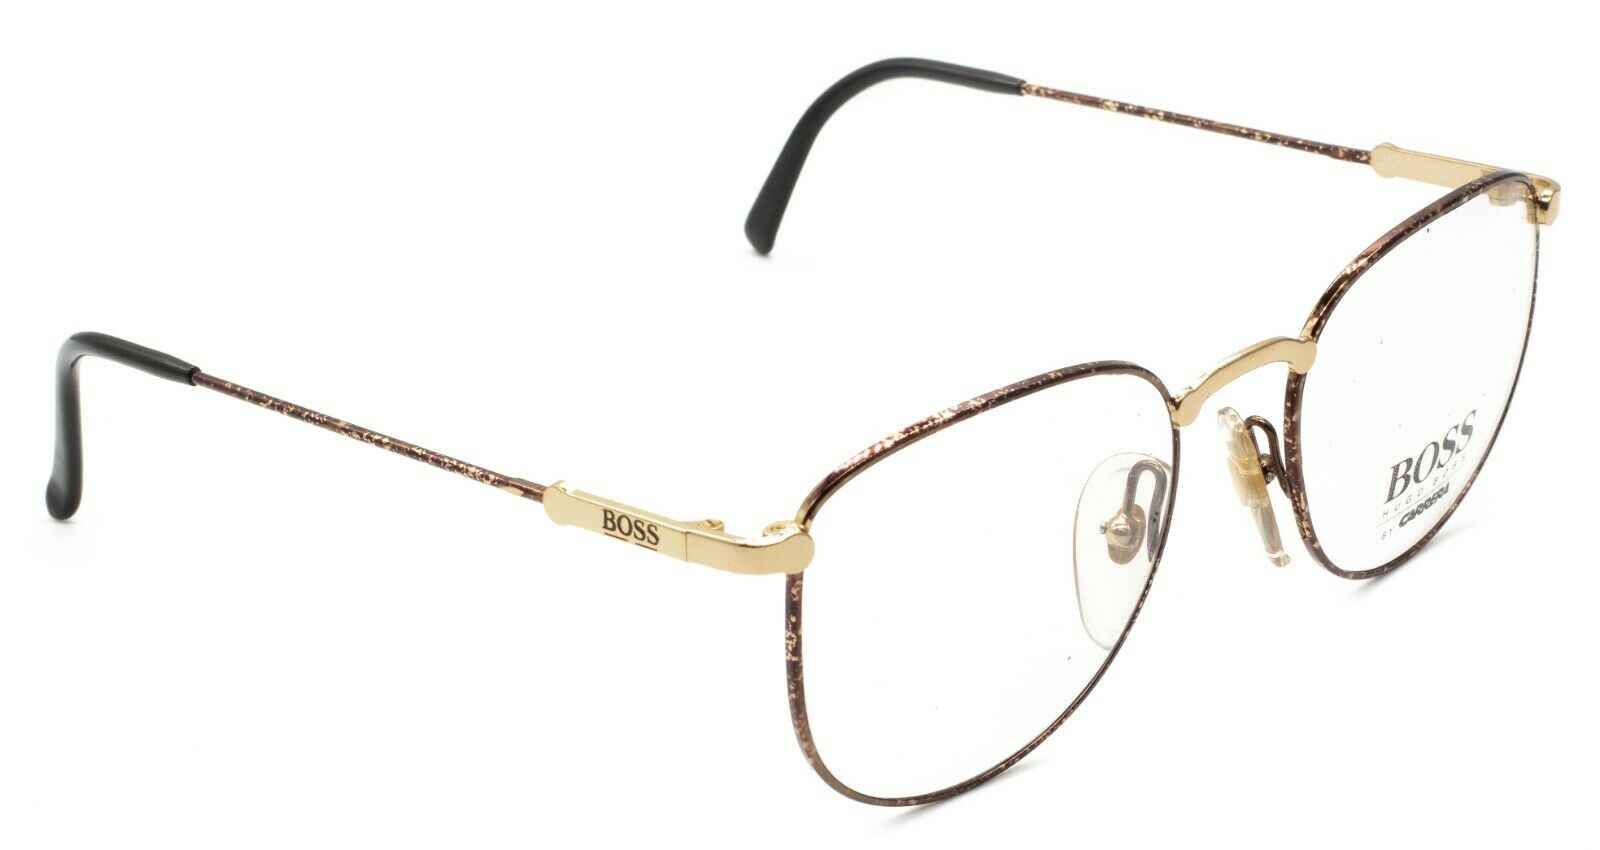 HUGO BOSS 5127 49 51mm Vintage Eyewear FRAMES Glasses RX Optical Eyeglasses New